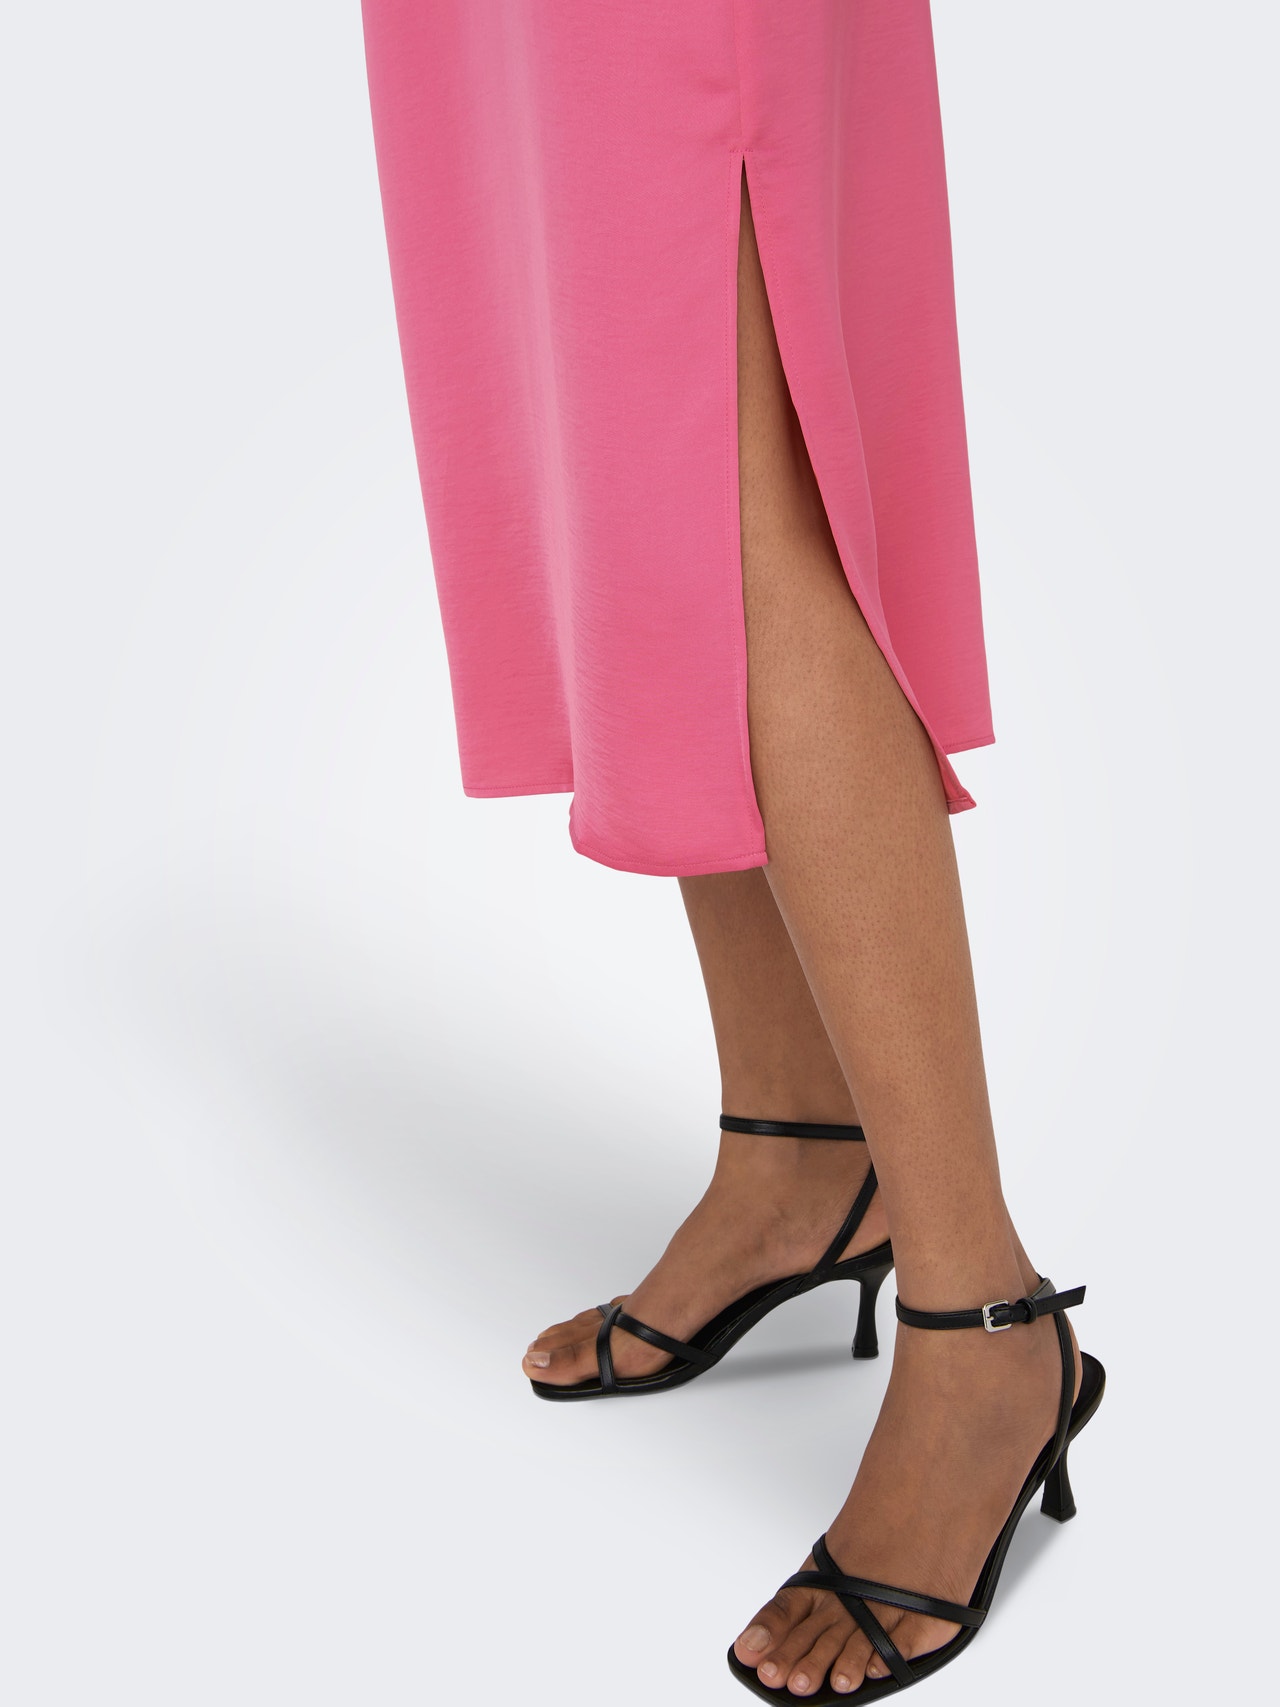 ONLY Midi Strap Dress -Pink Power - 15287925